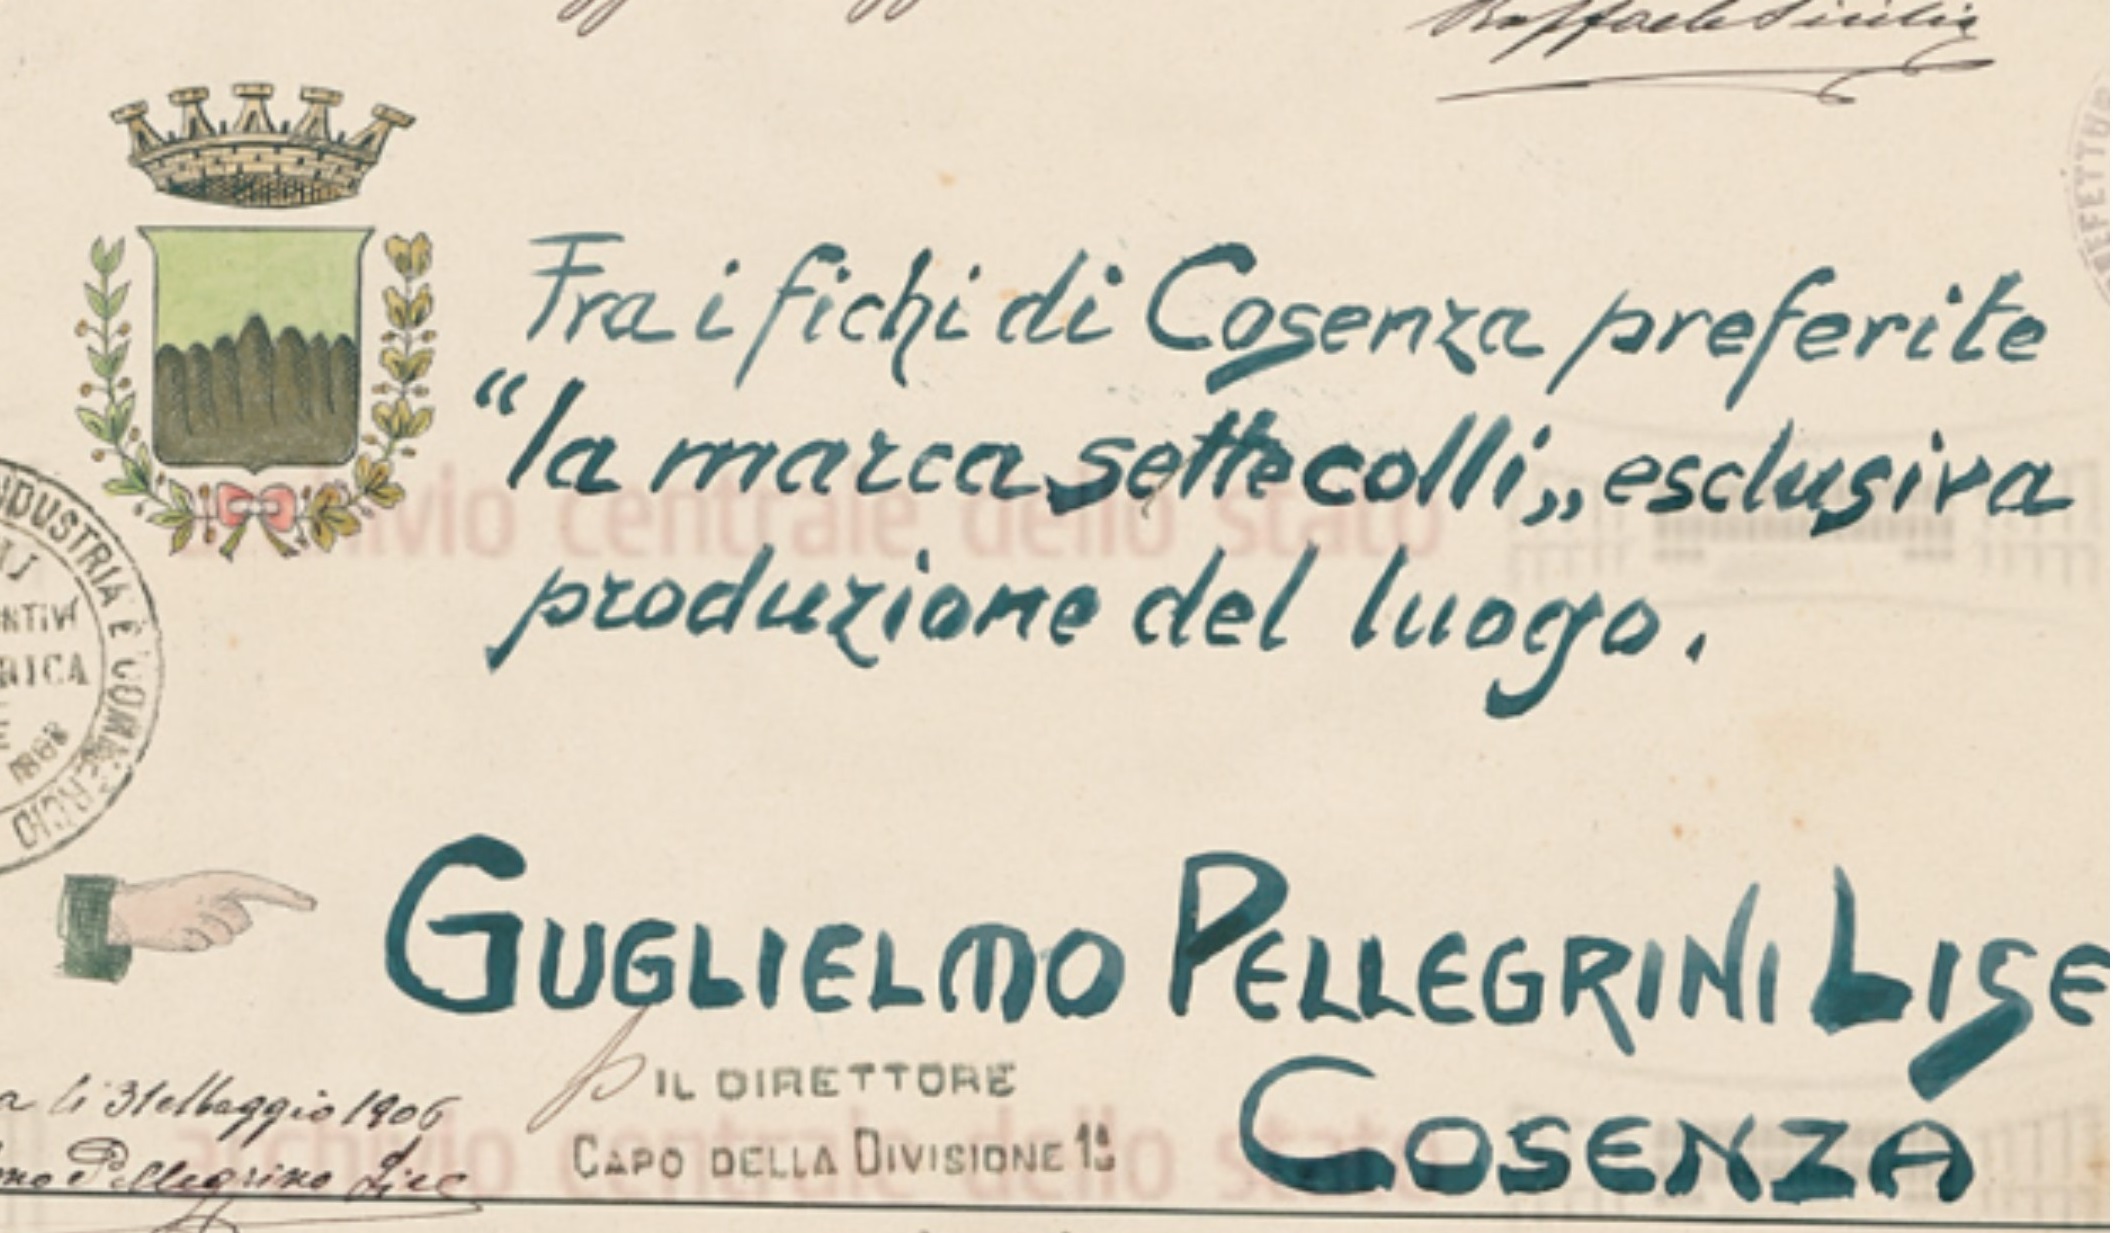 Guglielmo Pellegrini Lise, Cosenza,1906